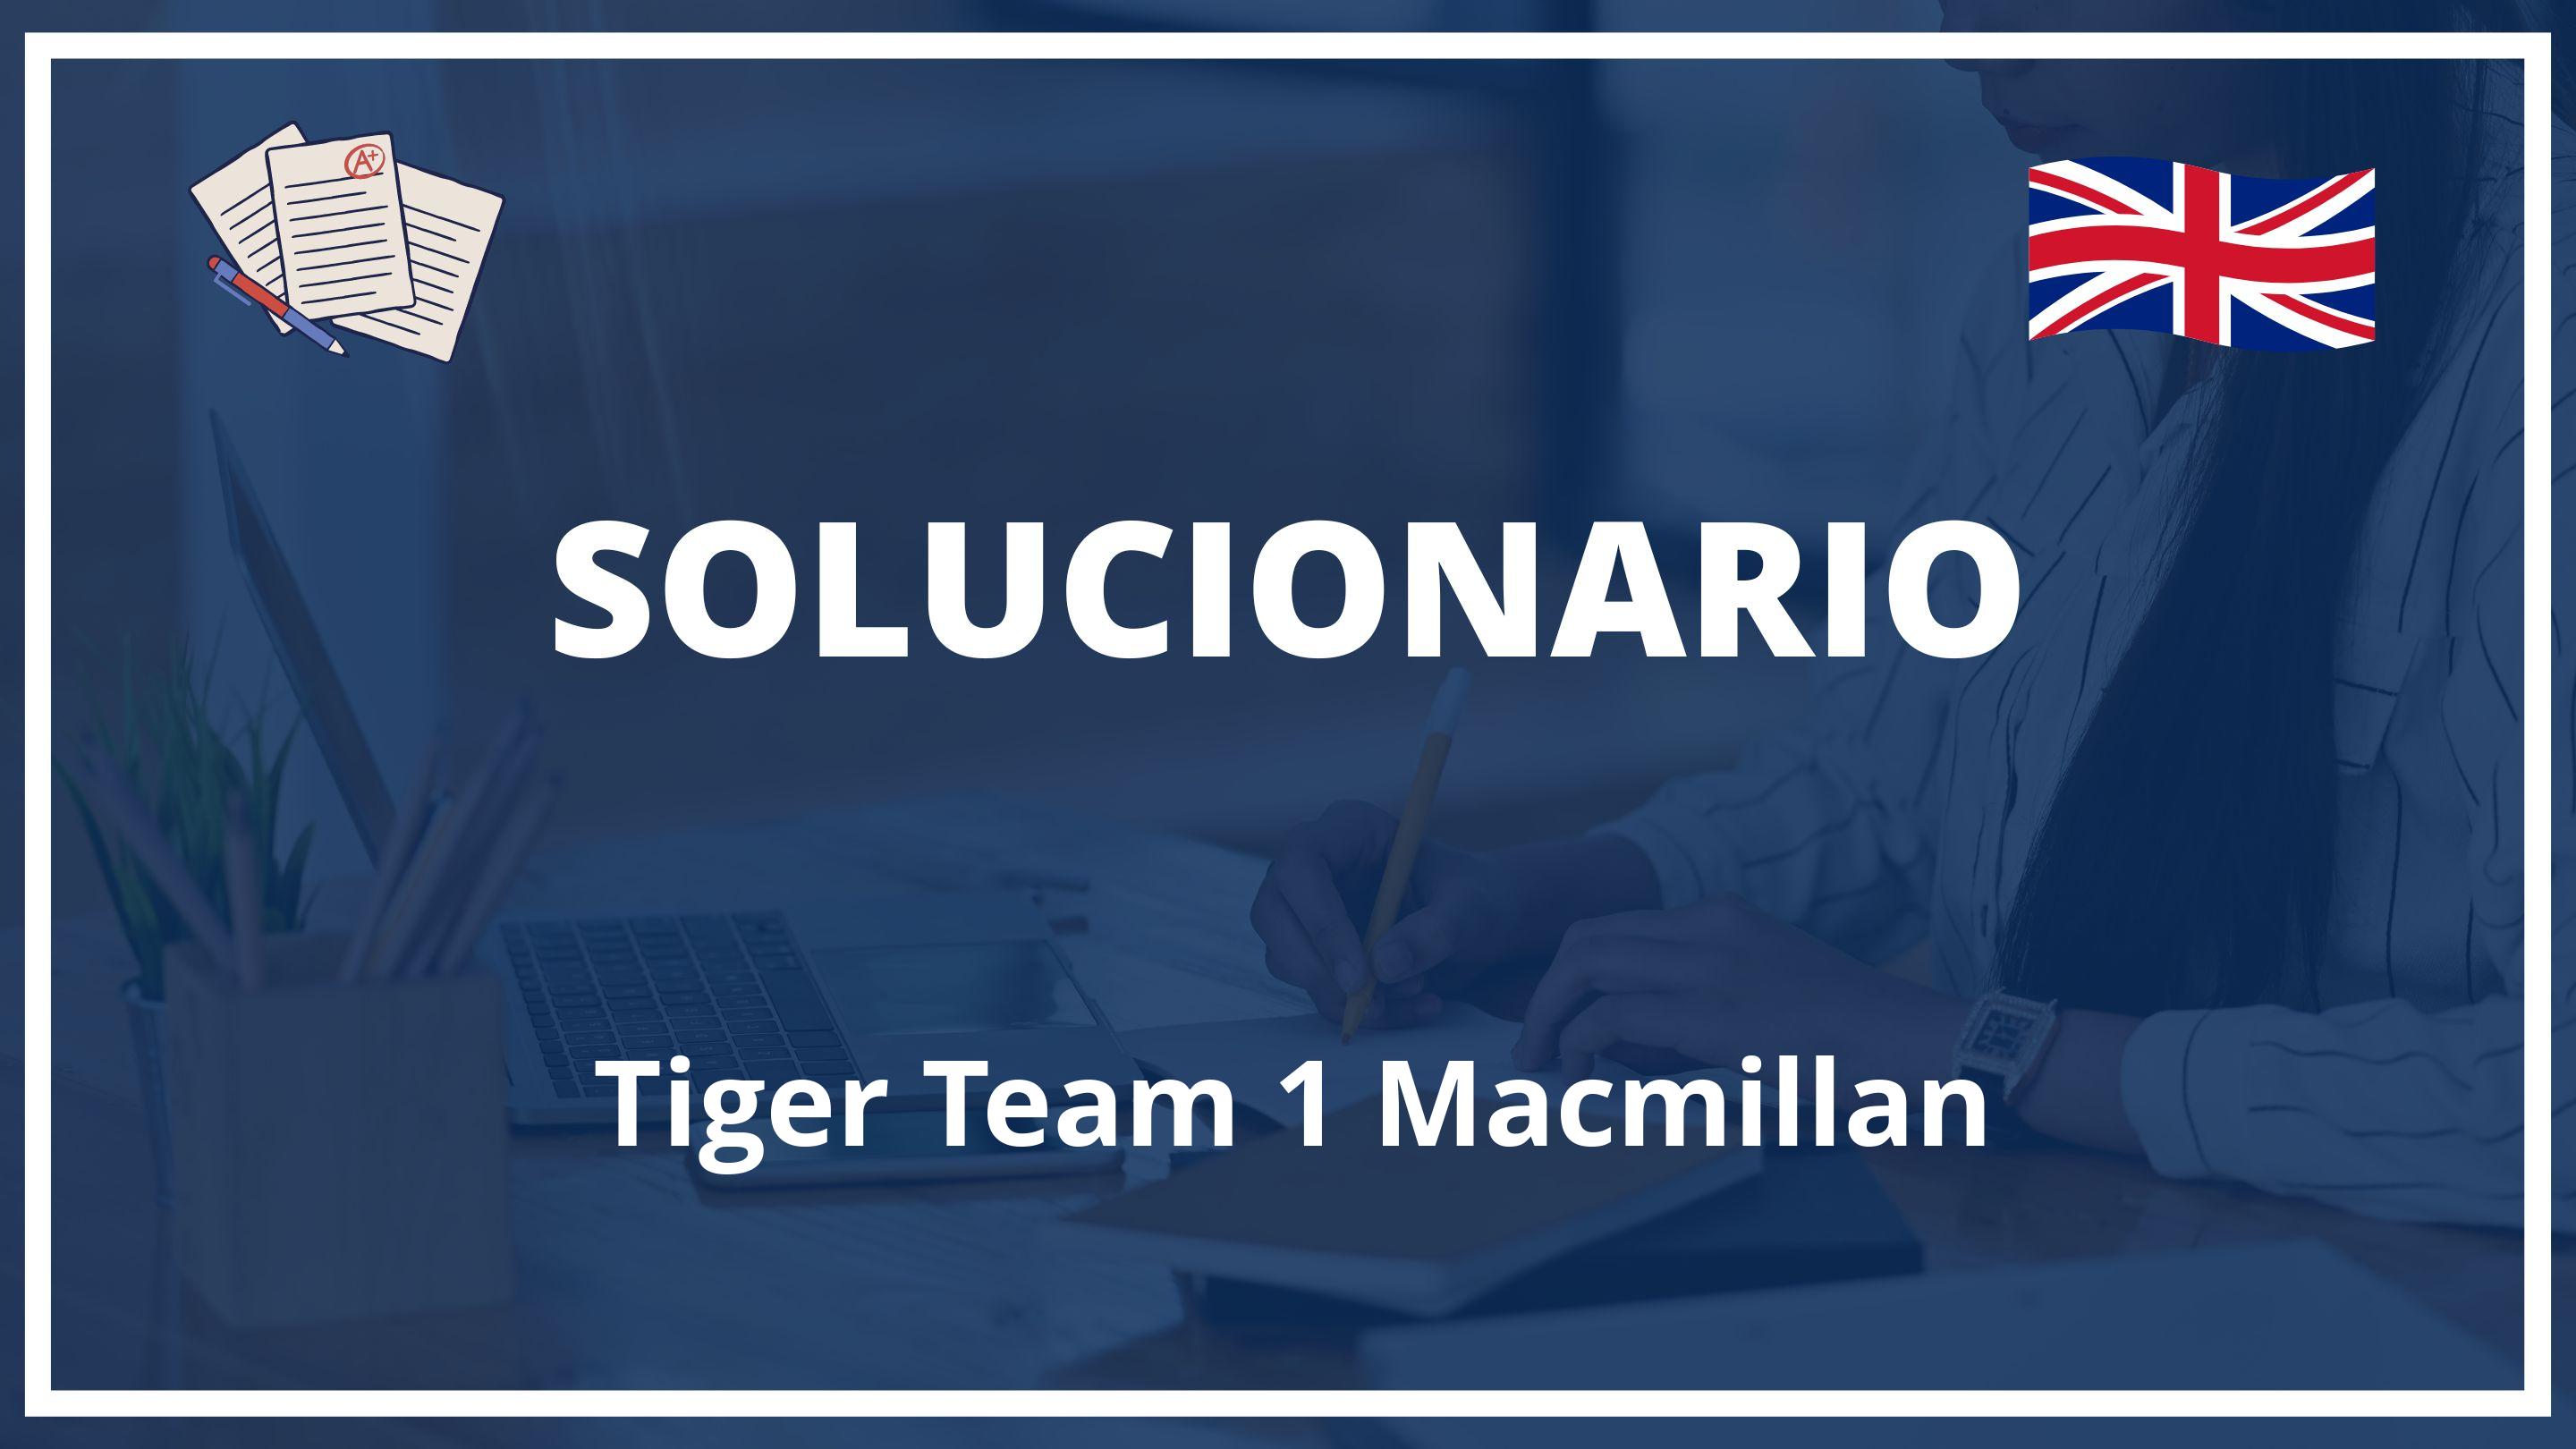 Tiger Team 1 Macmillan